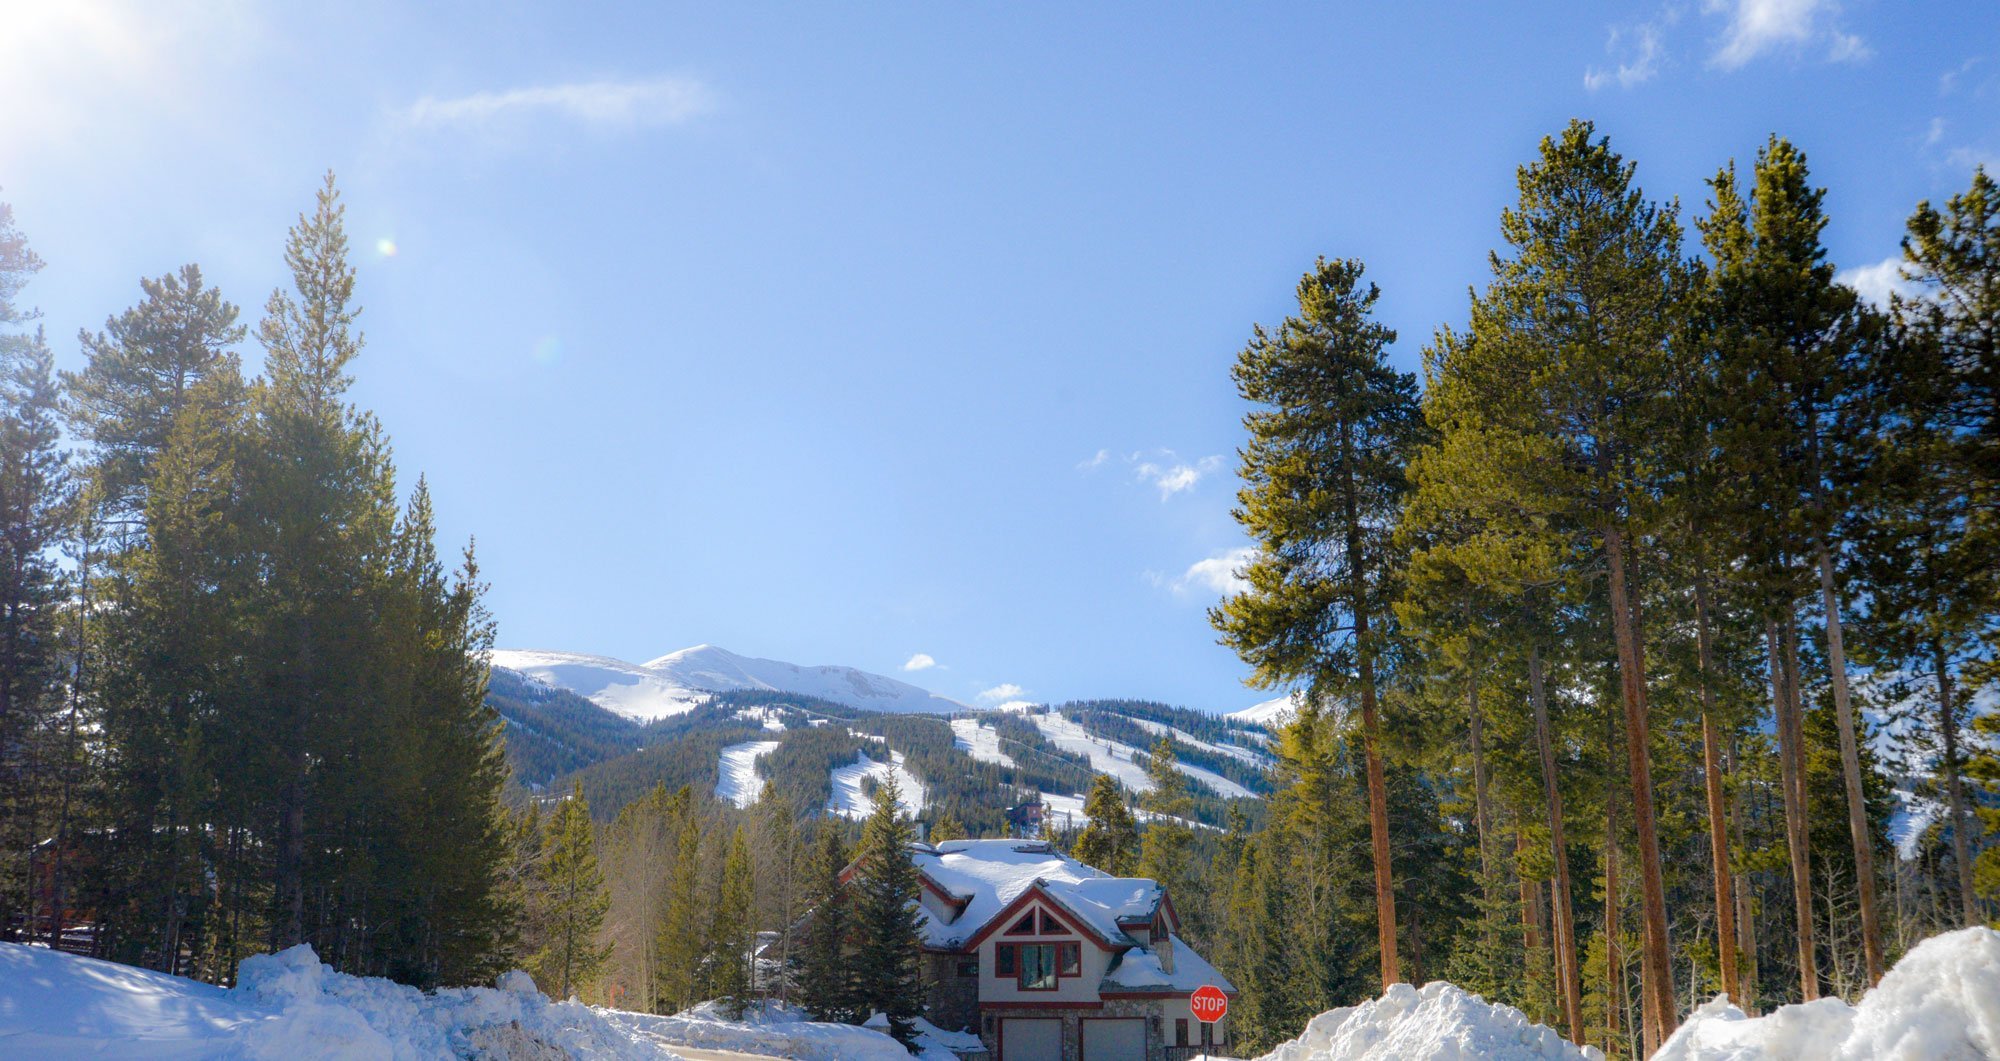 View of the Breckenridge Ski Resort from Warriors Mark West